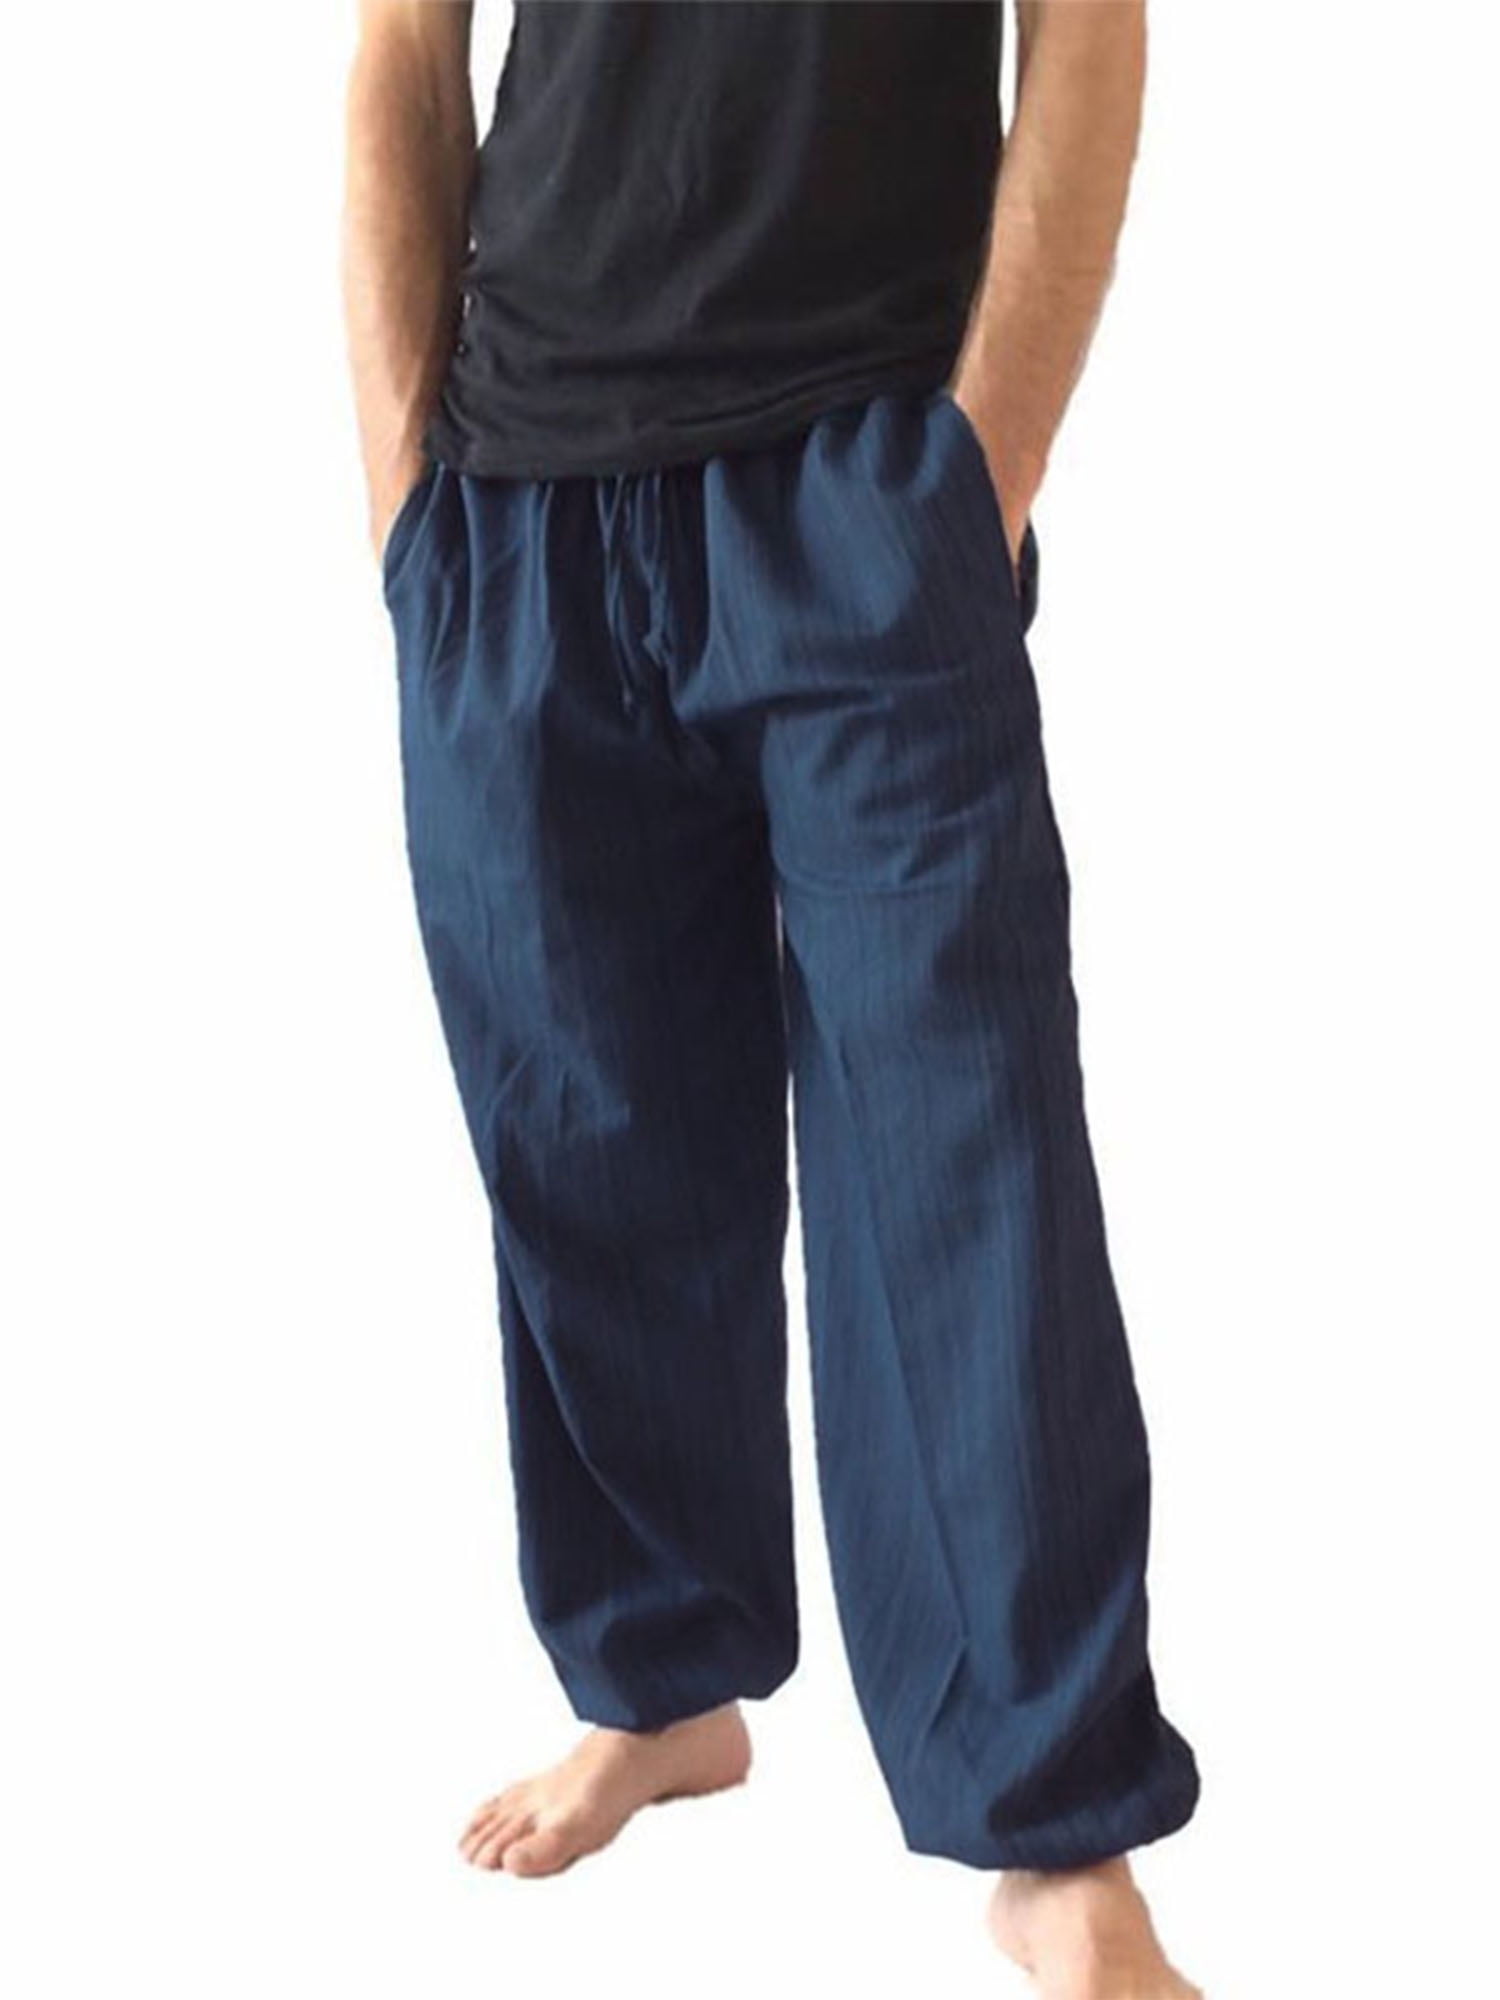 MAWCLOS Mens Big and Tall Relaxed Fit Pants Elastic Waist Comfort Soft ...